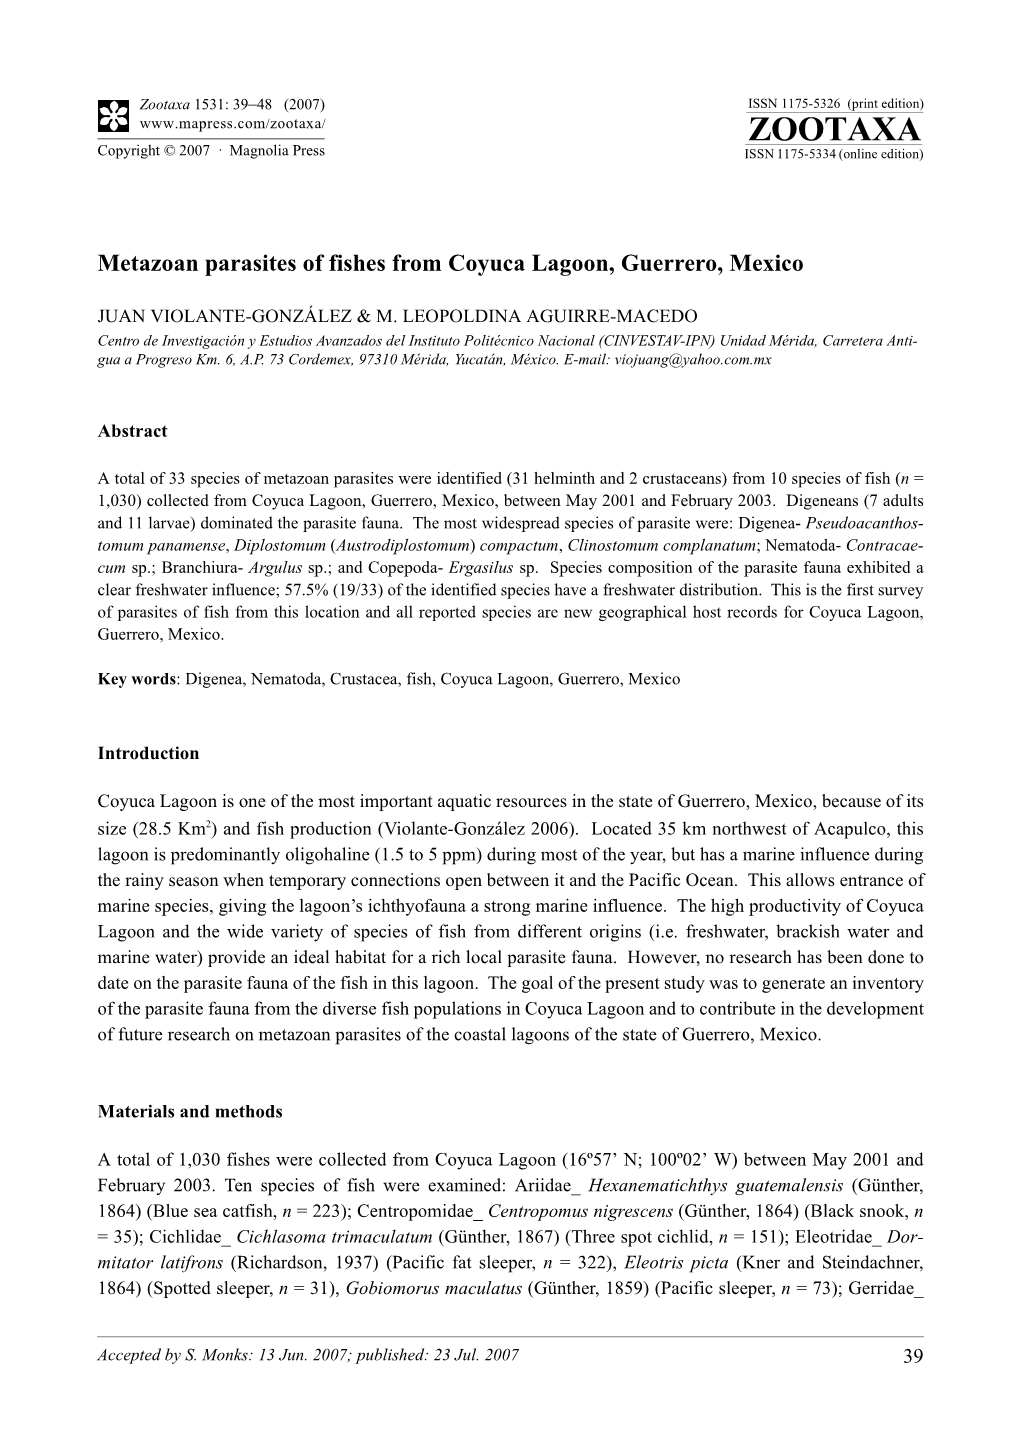 Zootaxa,Metazoan Parasites of Fishes from Coyuca Lagoon, Guerrero